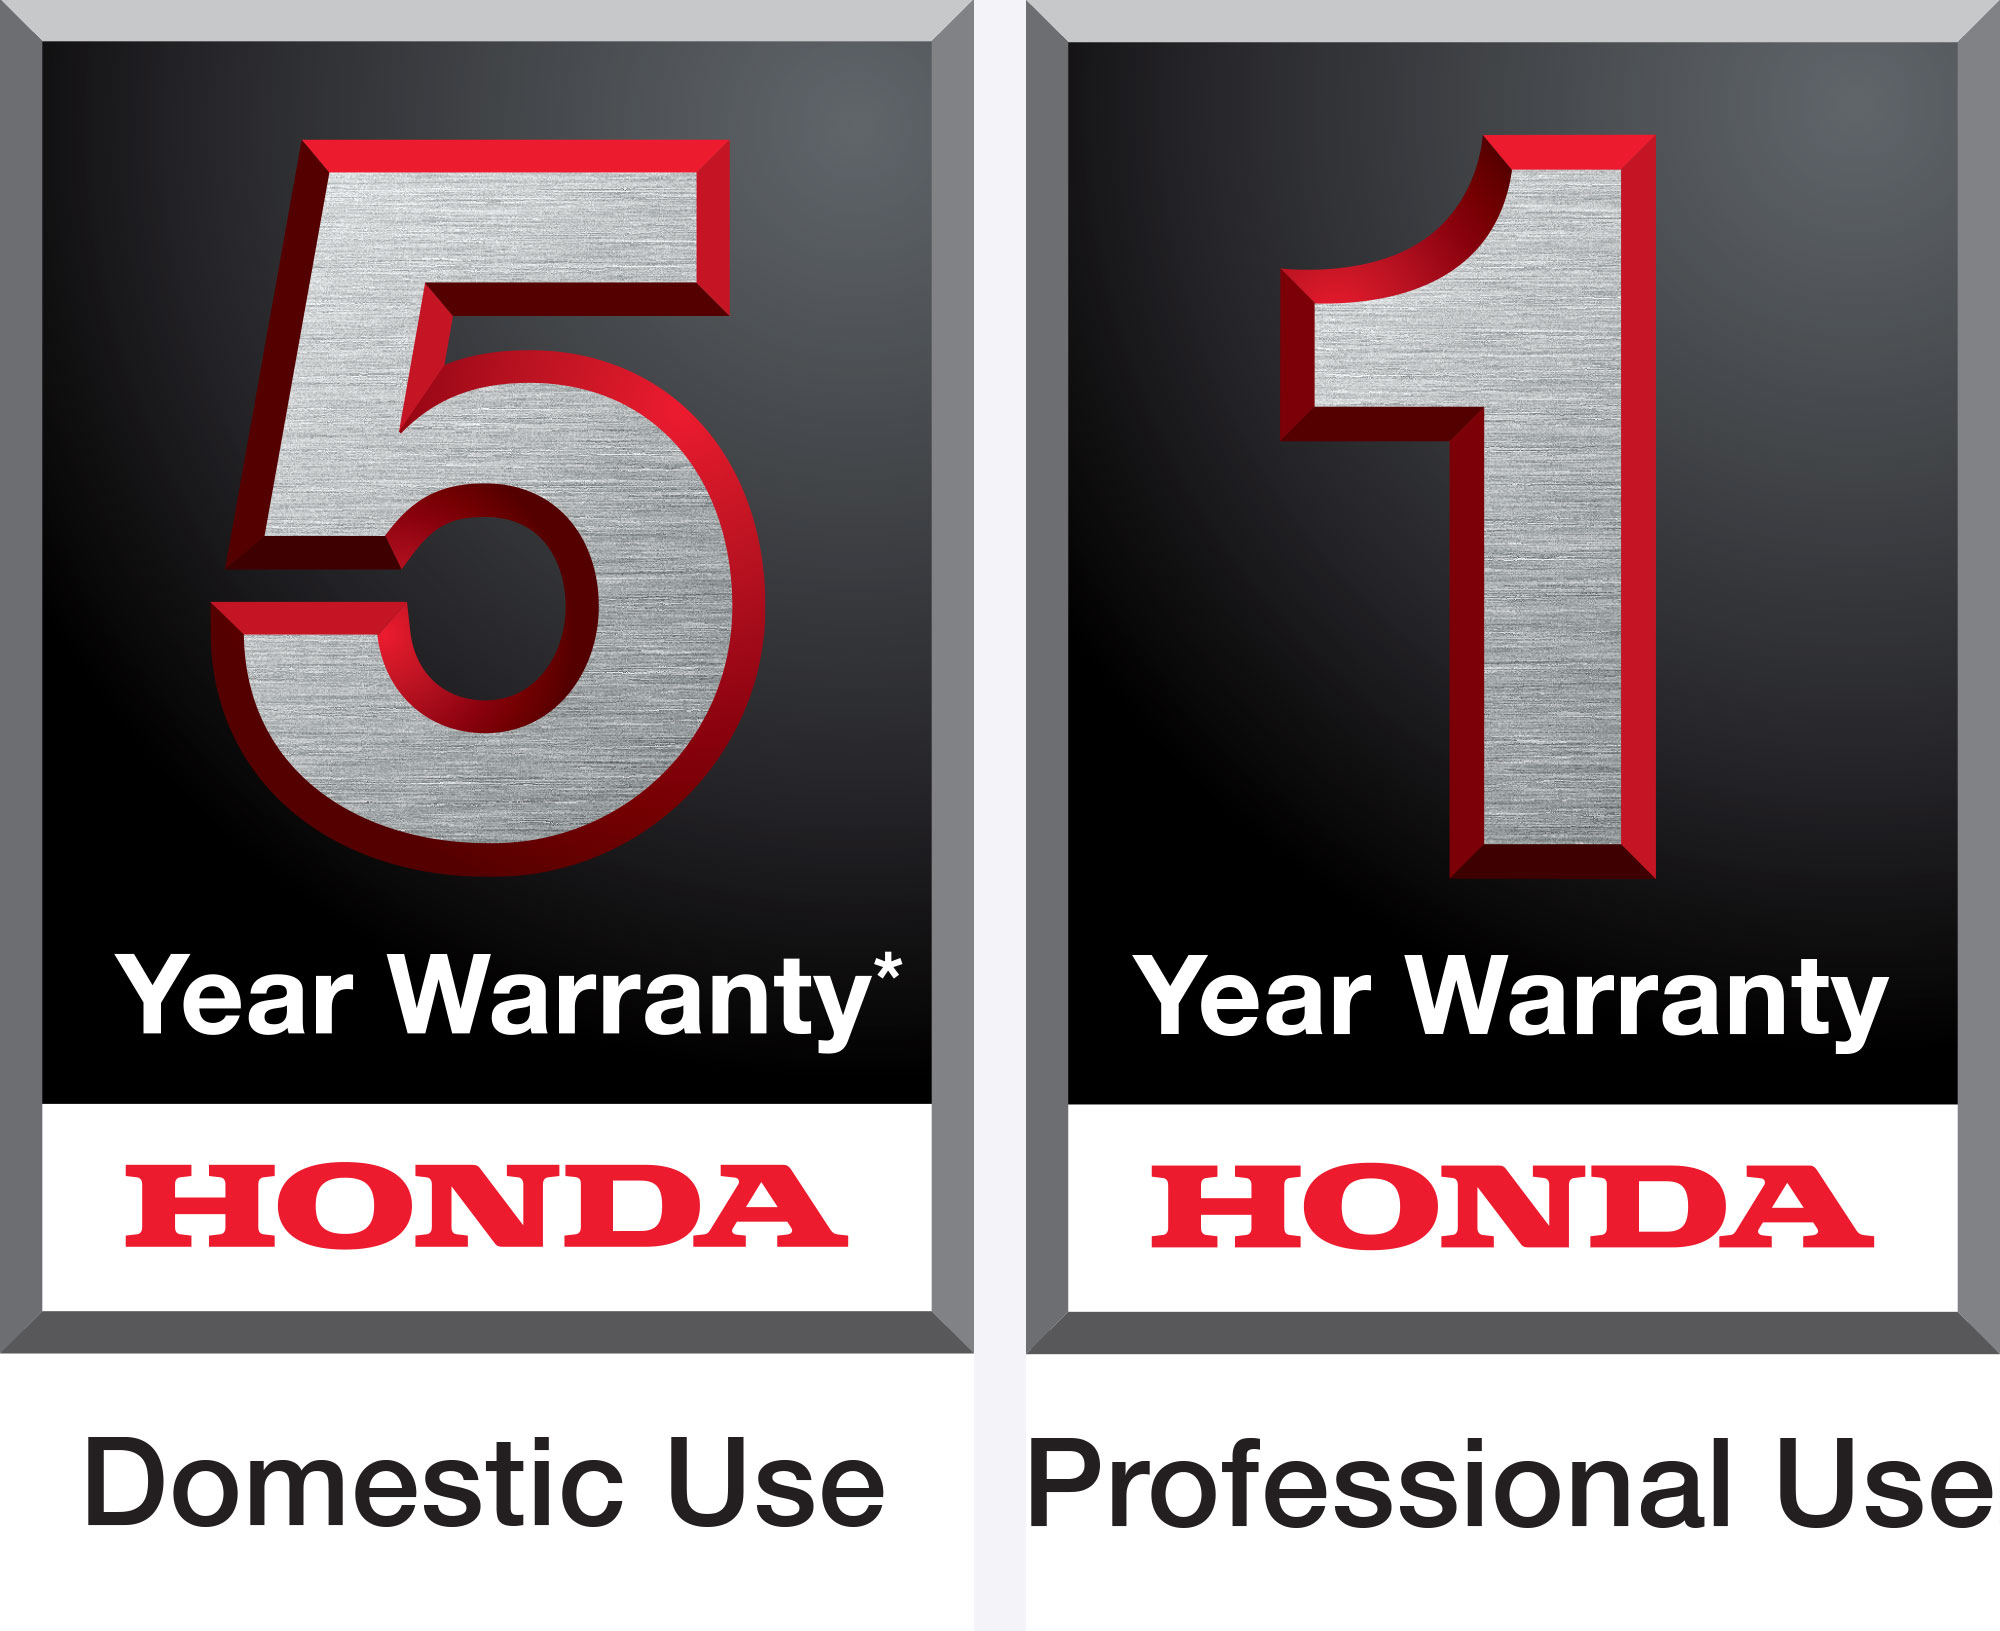 5year warranty. Honda. Domestic Use. 1 year warrant. Honda. Professional Use